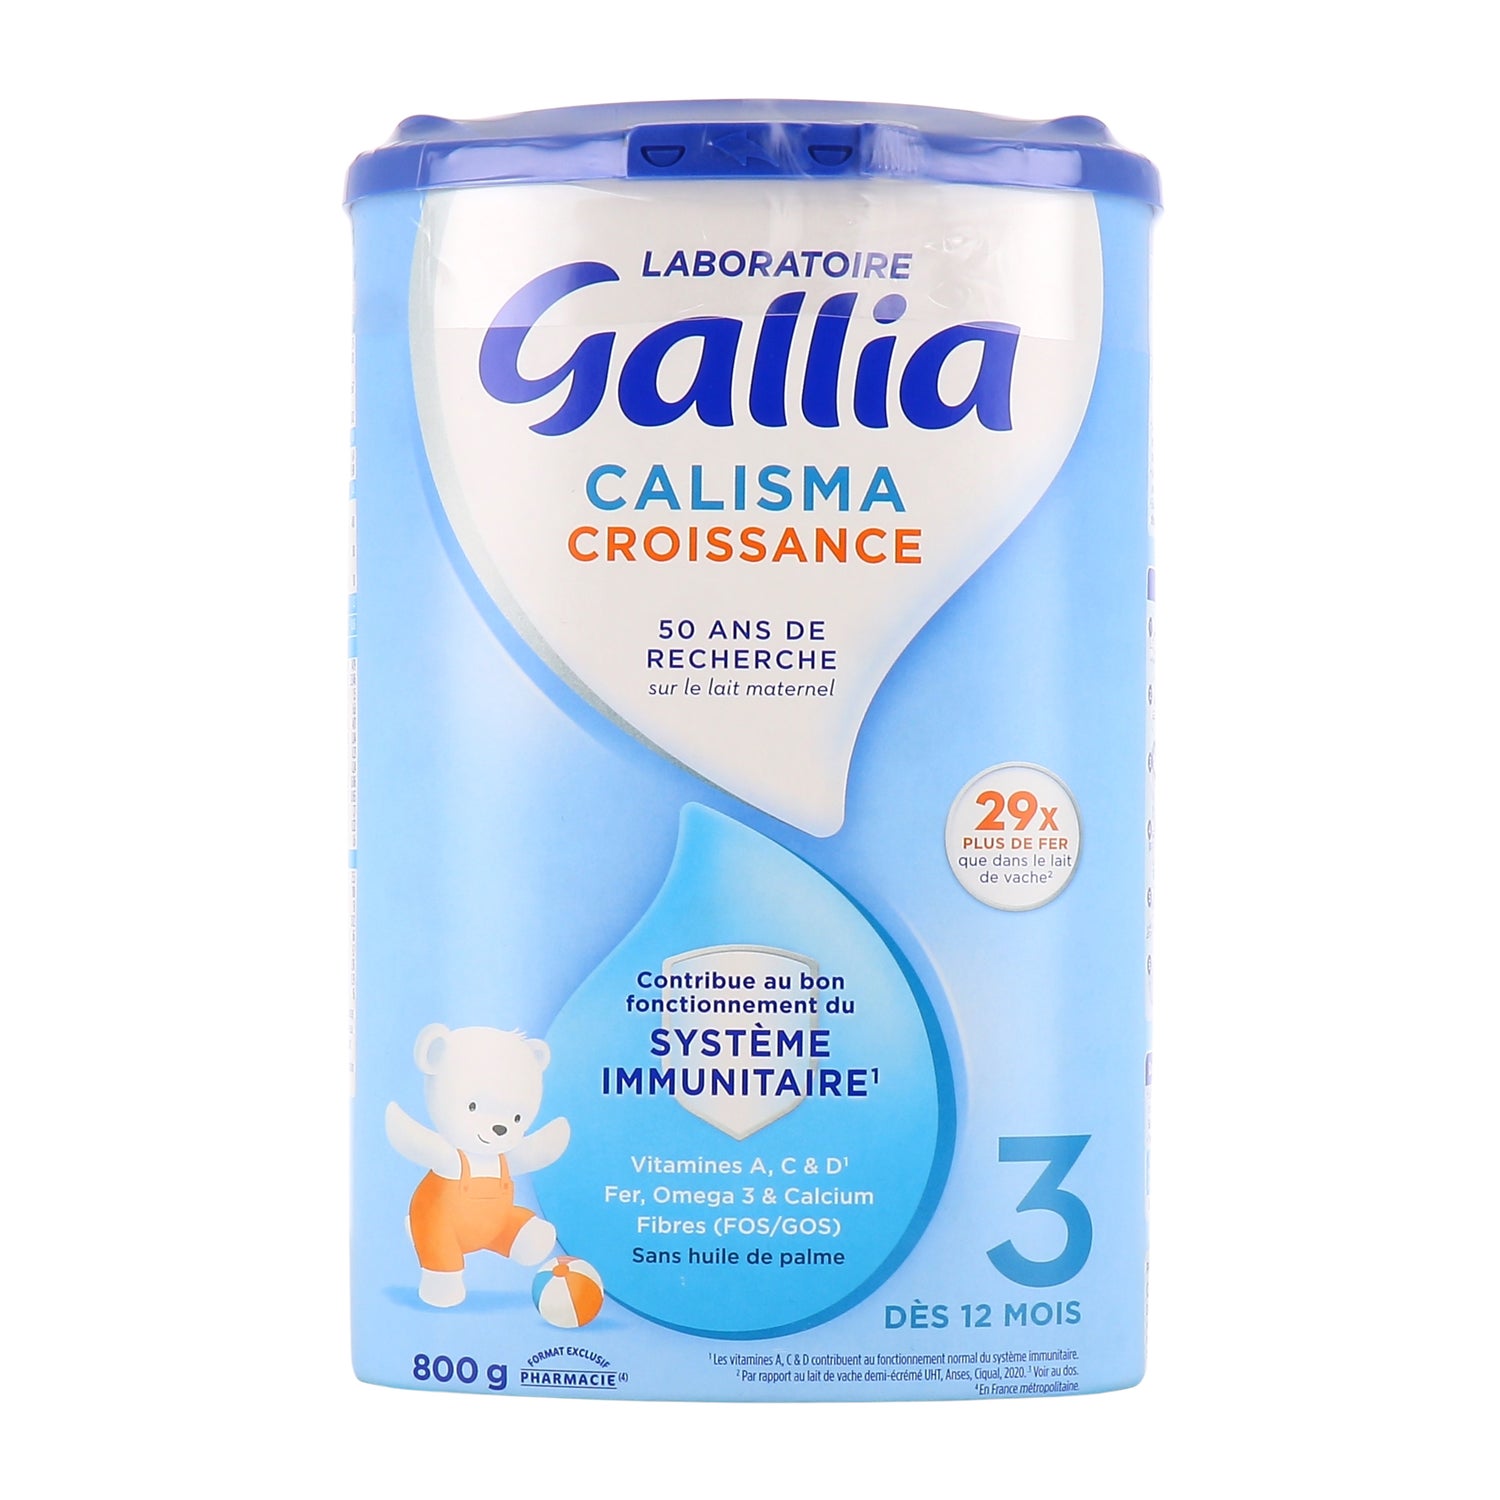 Gallia Calisma 2, 1200g